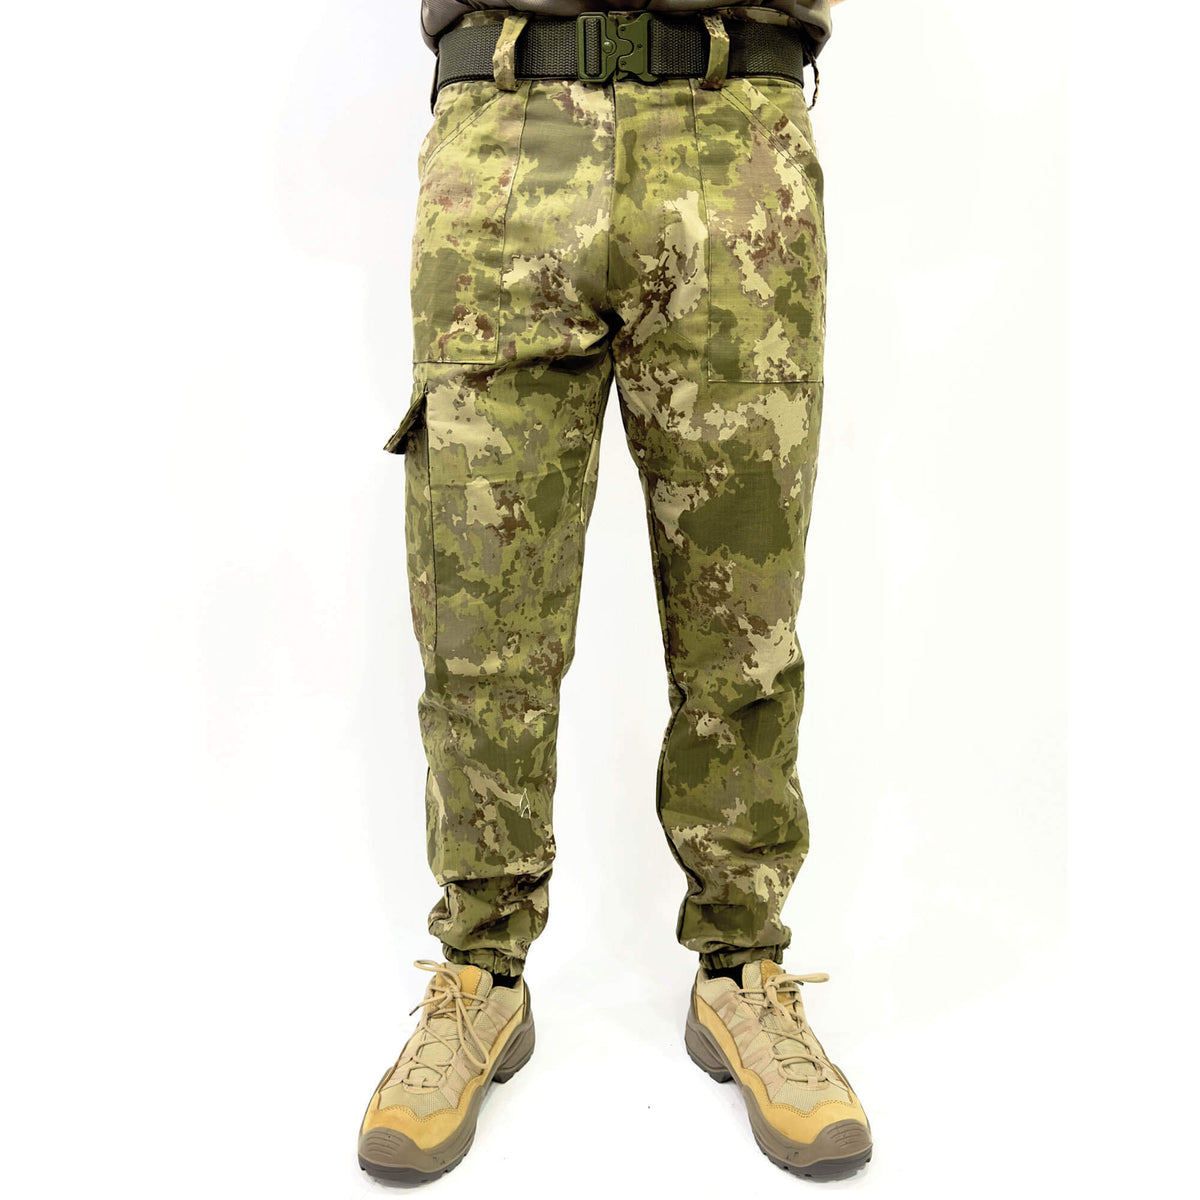 Outdoor CRW Camouflage Pants